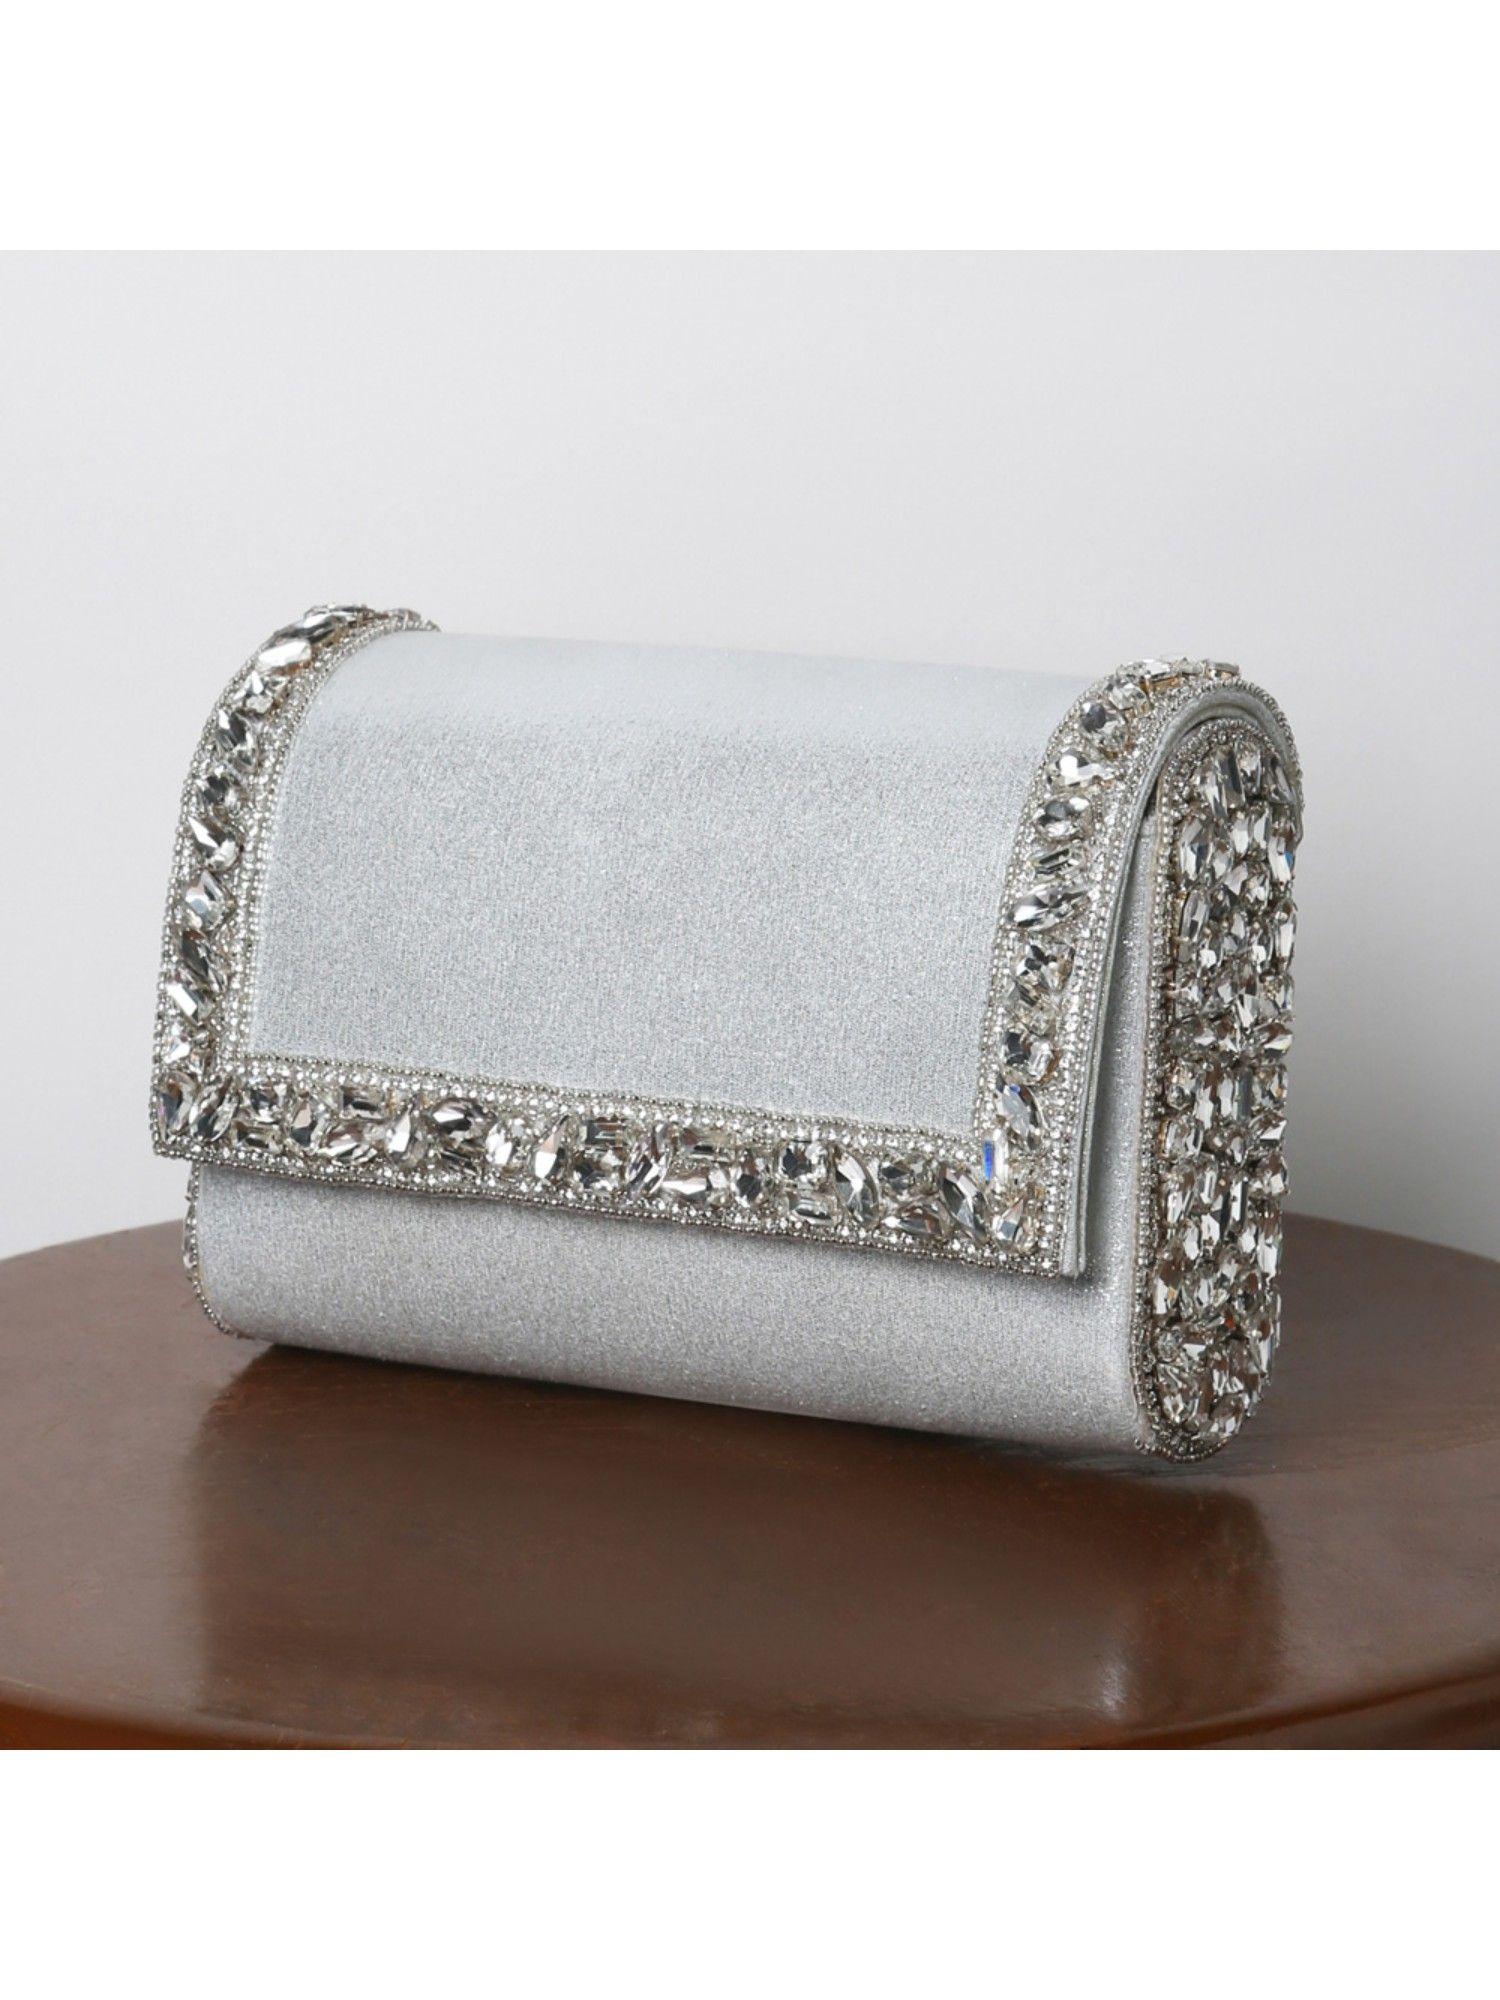 clutch purses for women wedding handmade evening party bridal clutch - c100s